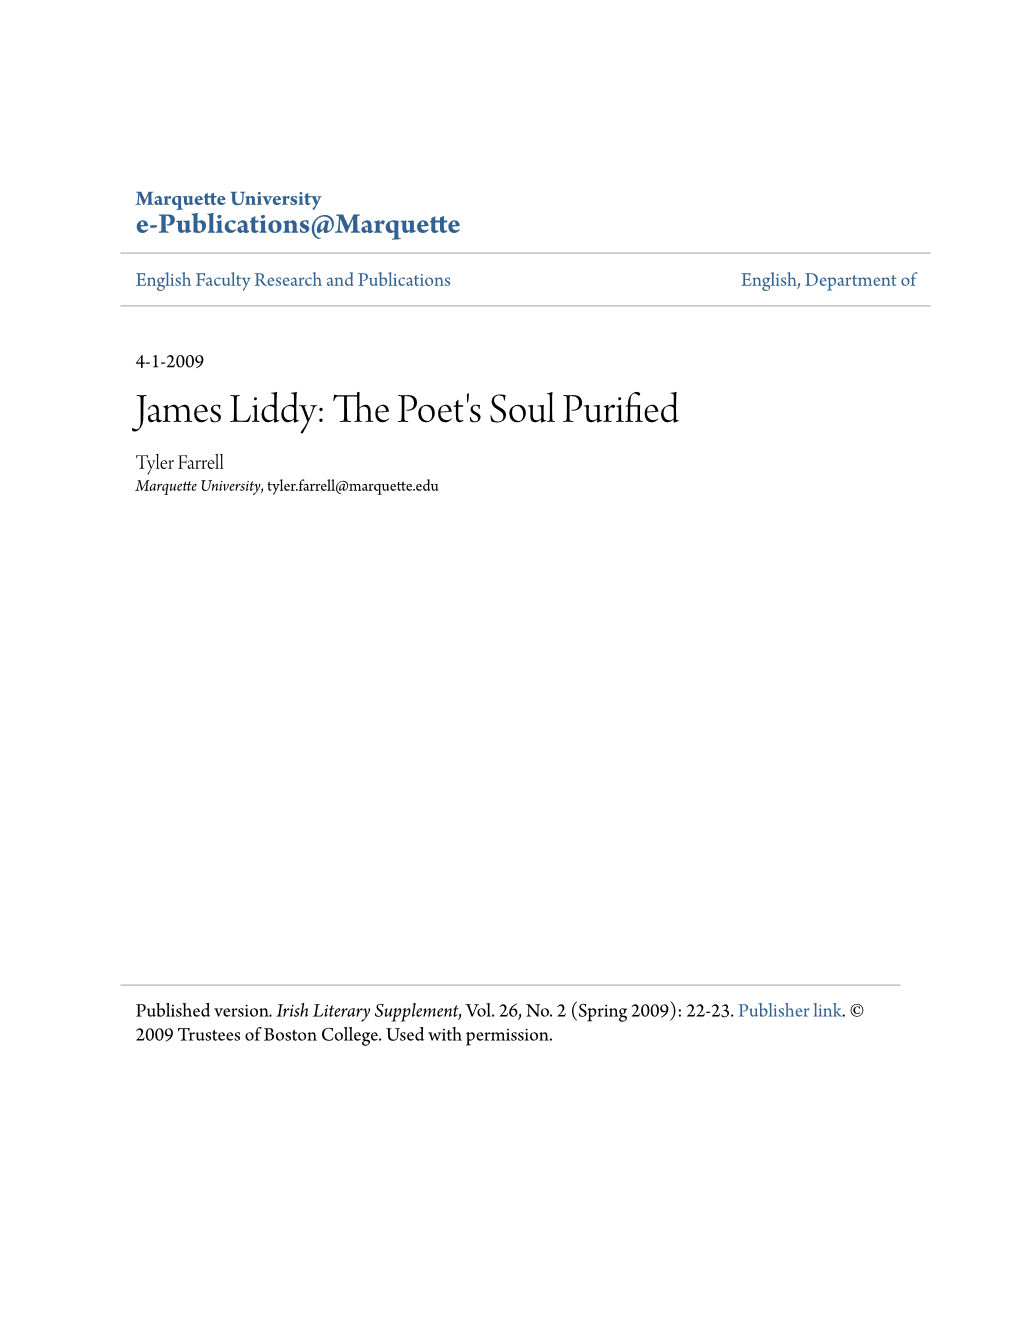 James Liddy: the Poet's Soul Purified